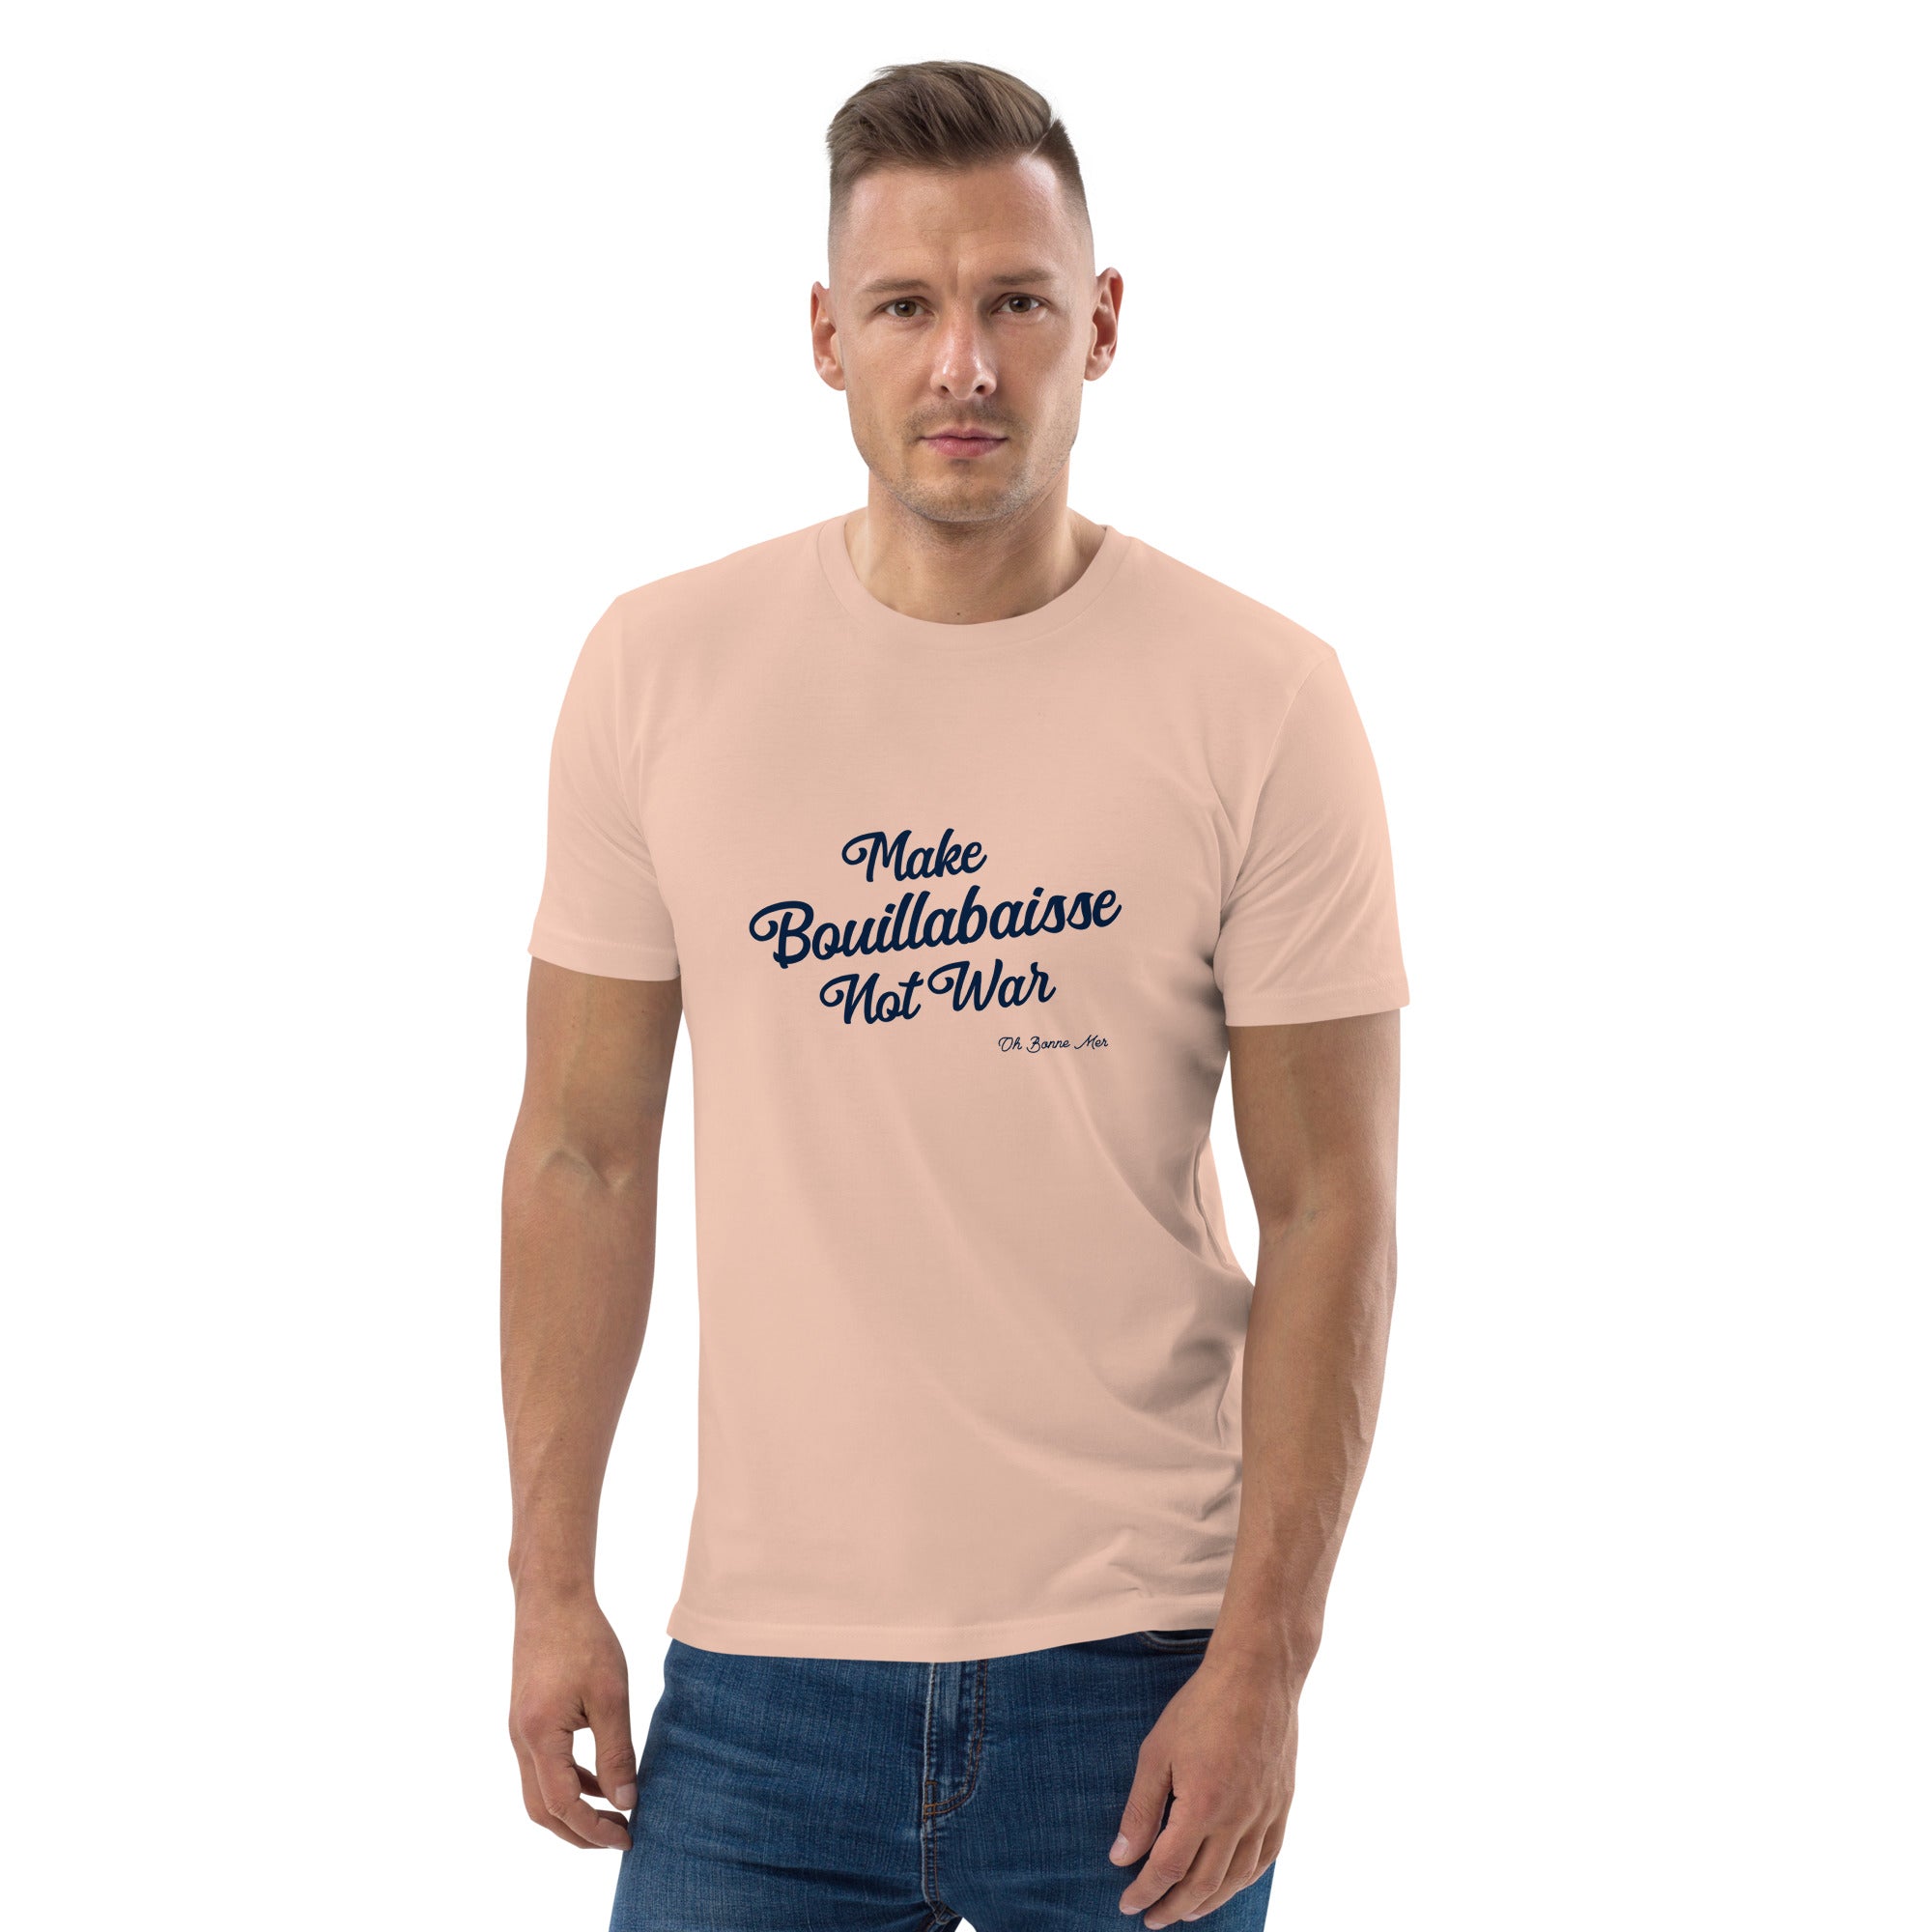 Unisex organic cotton t-shirt Make Bouillabaisse Not War on light colors